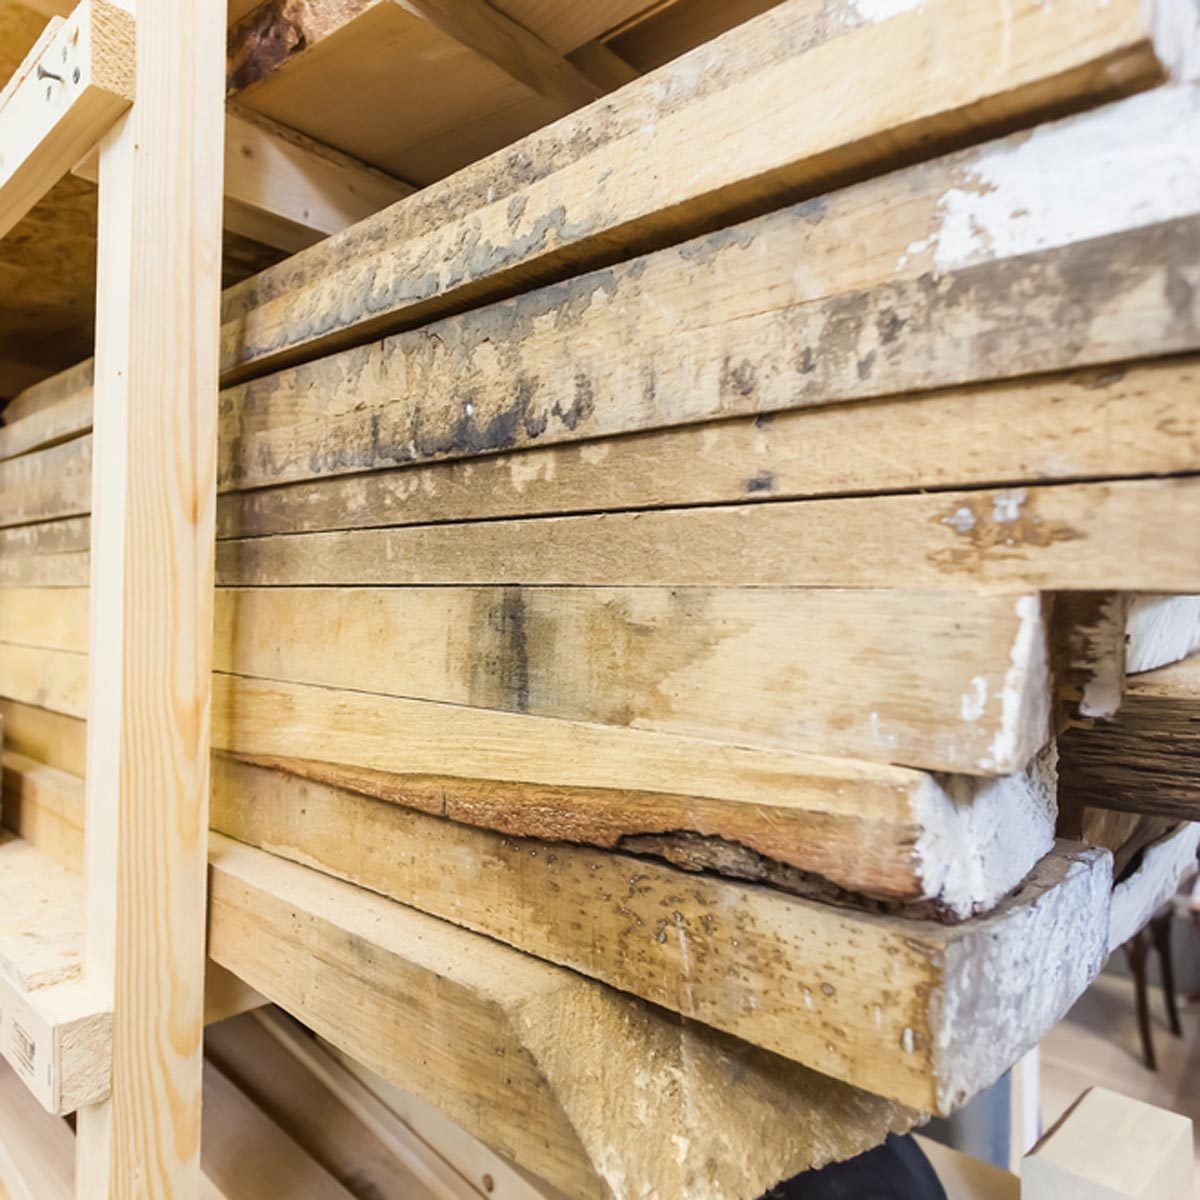 dfh9_shutterstock_691494142 lumber wood rack storage